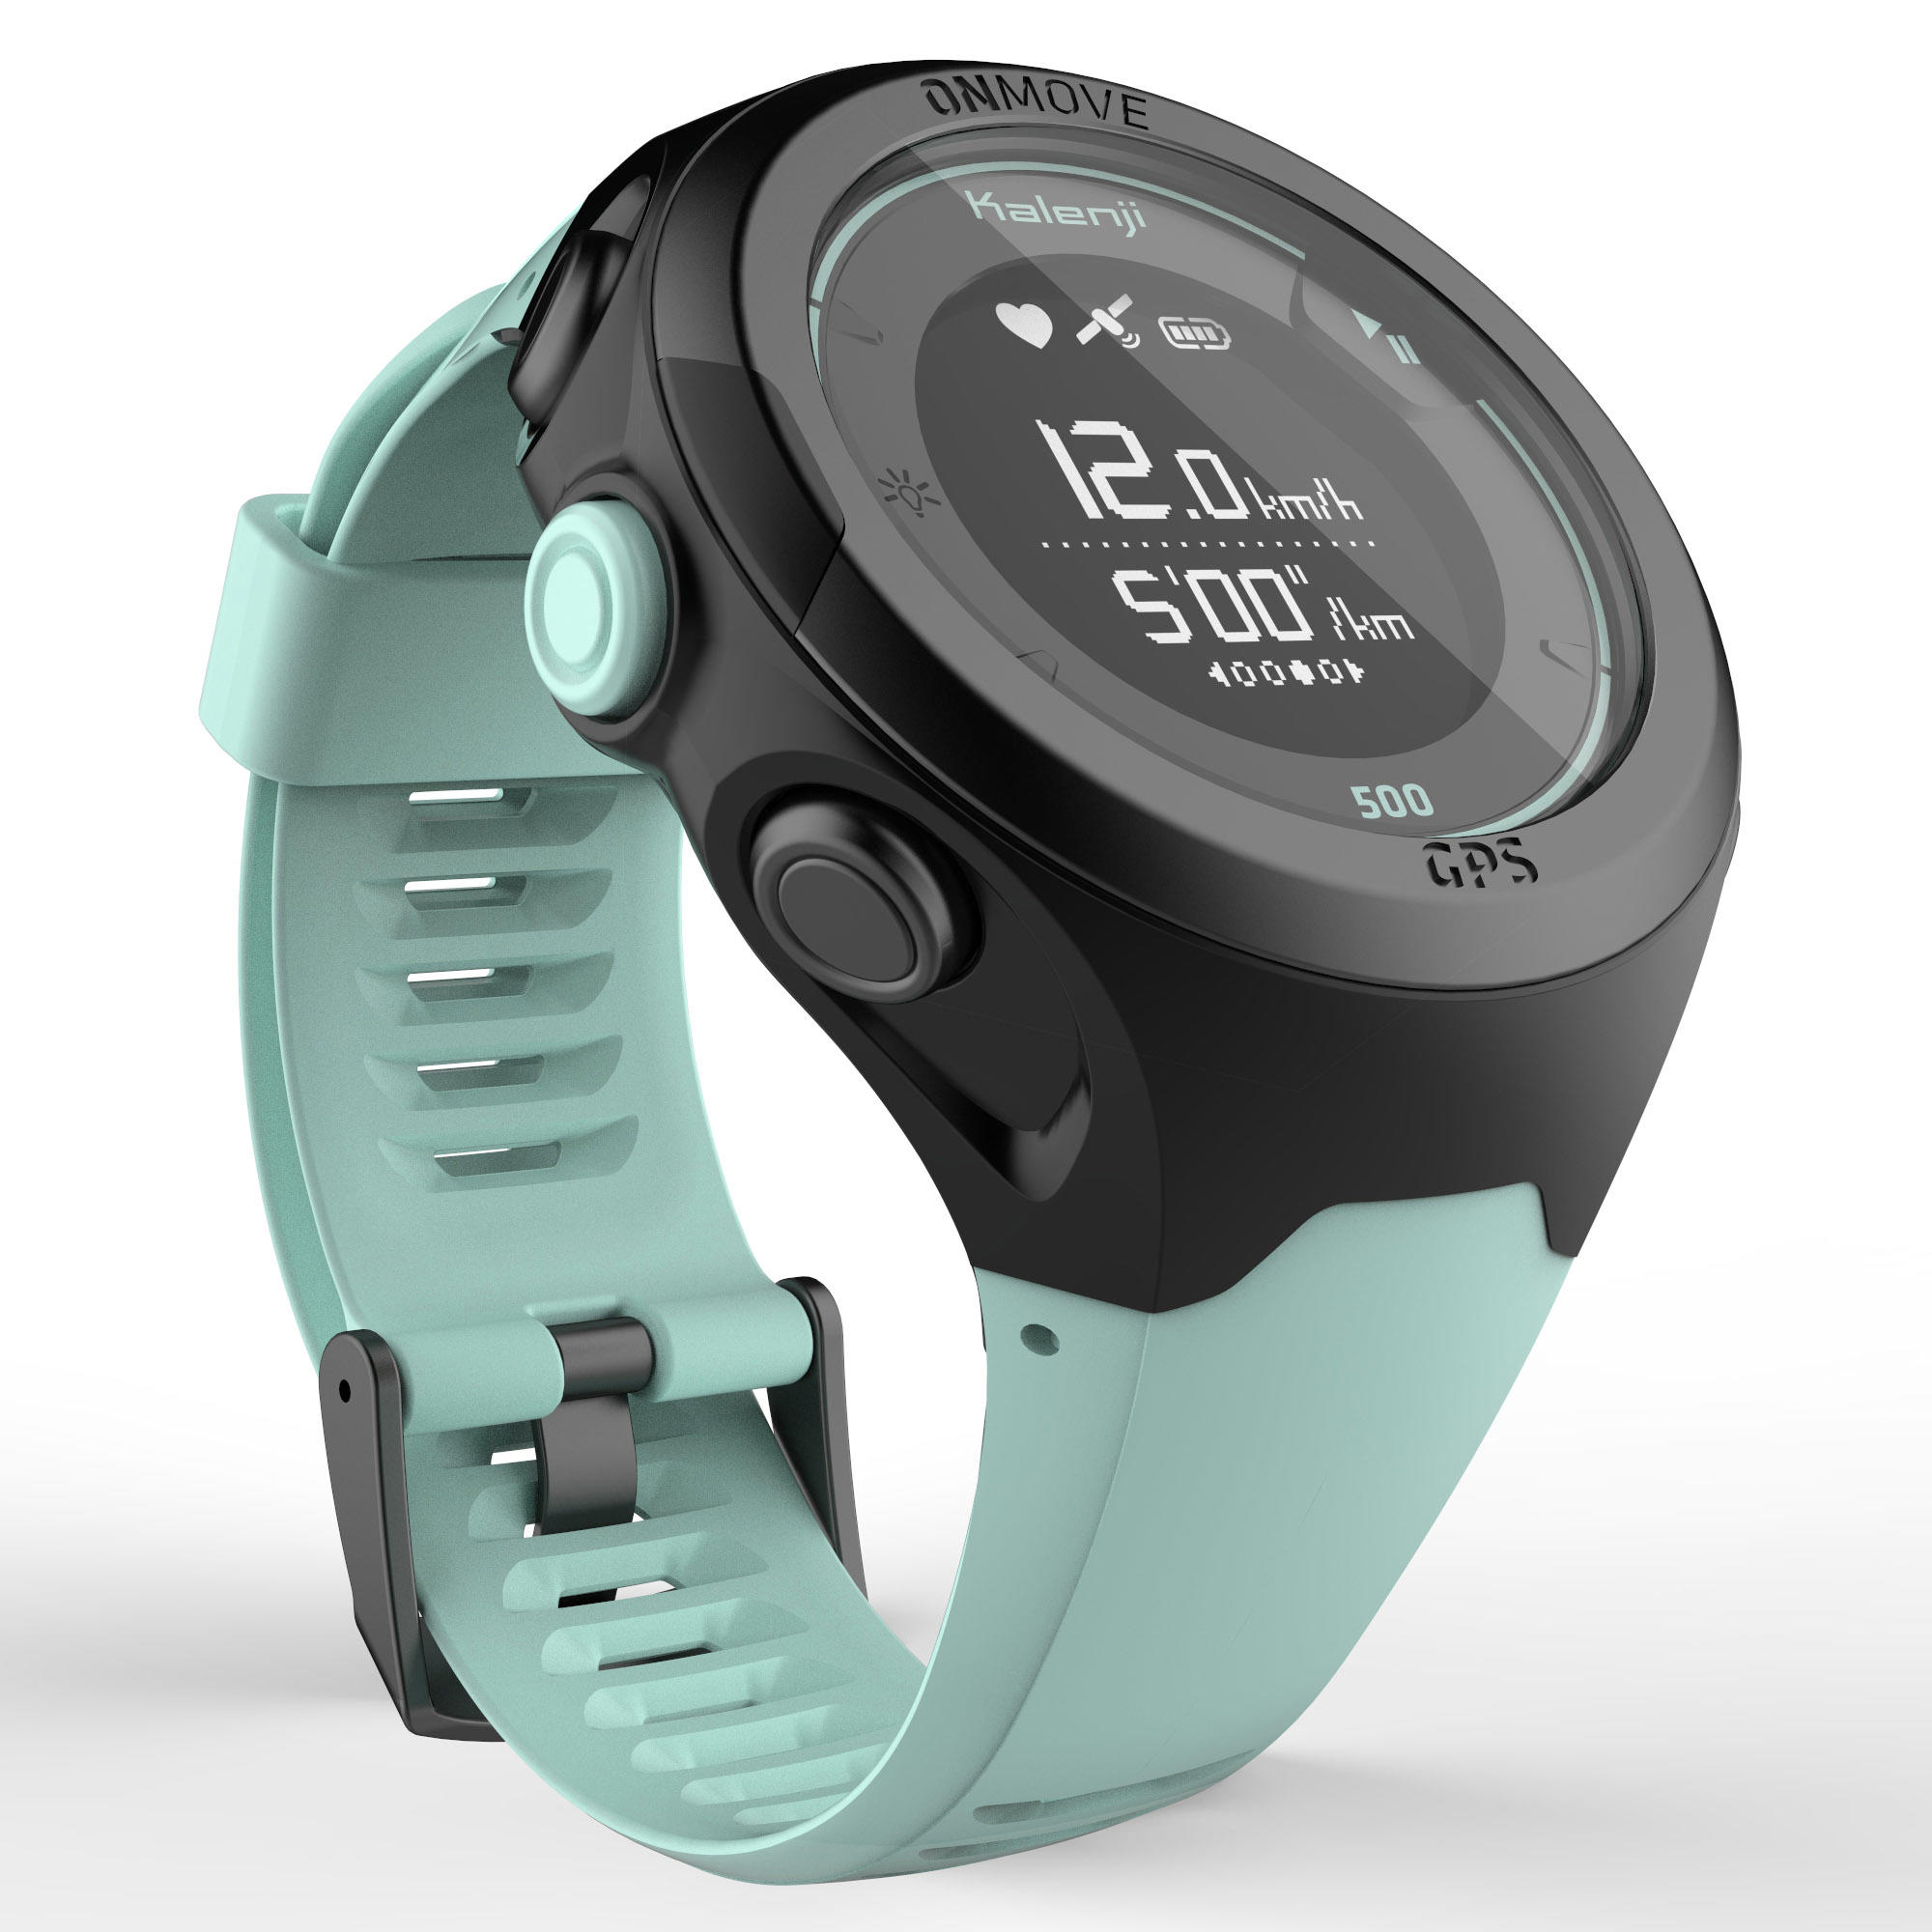 ONmove 500 GPS running watch and wrist heart rate monitor - sea green 4/17